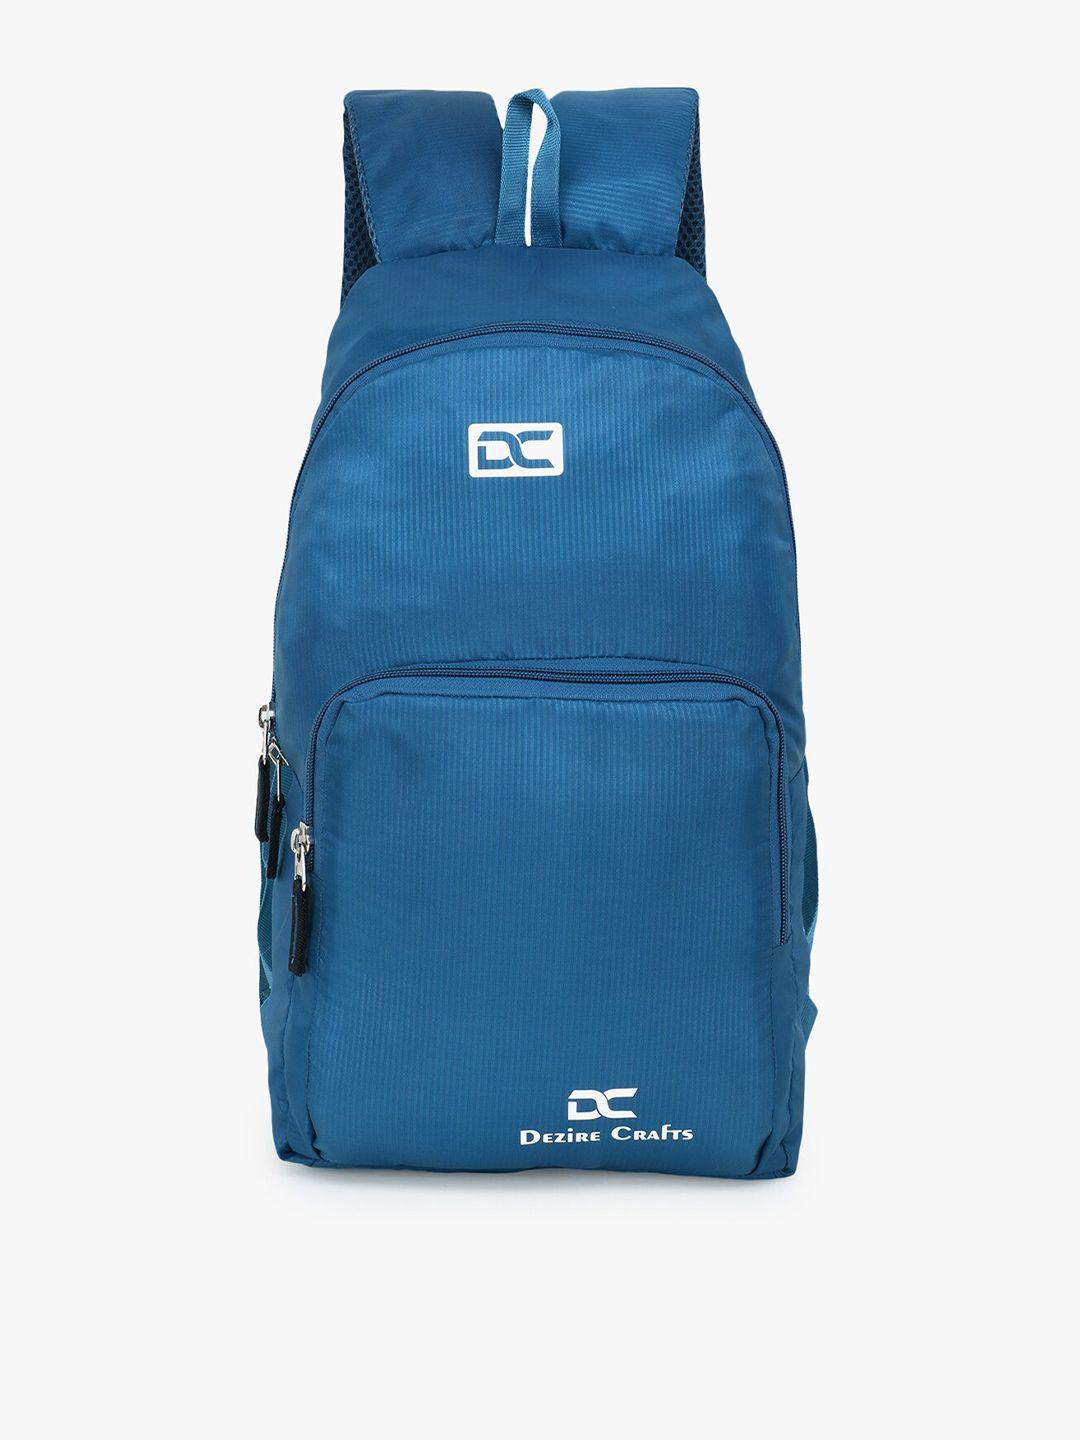 dezire crafts unisex blue & white brand logo backpack